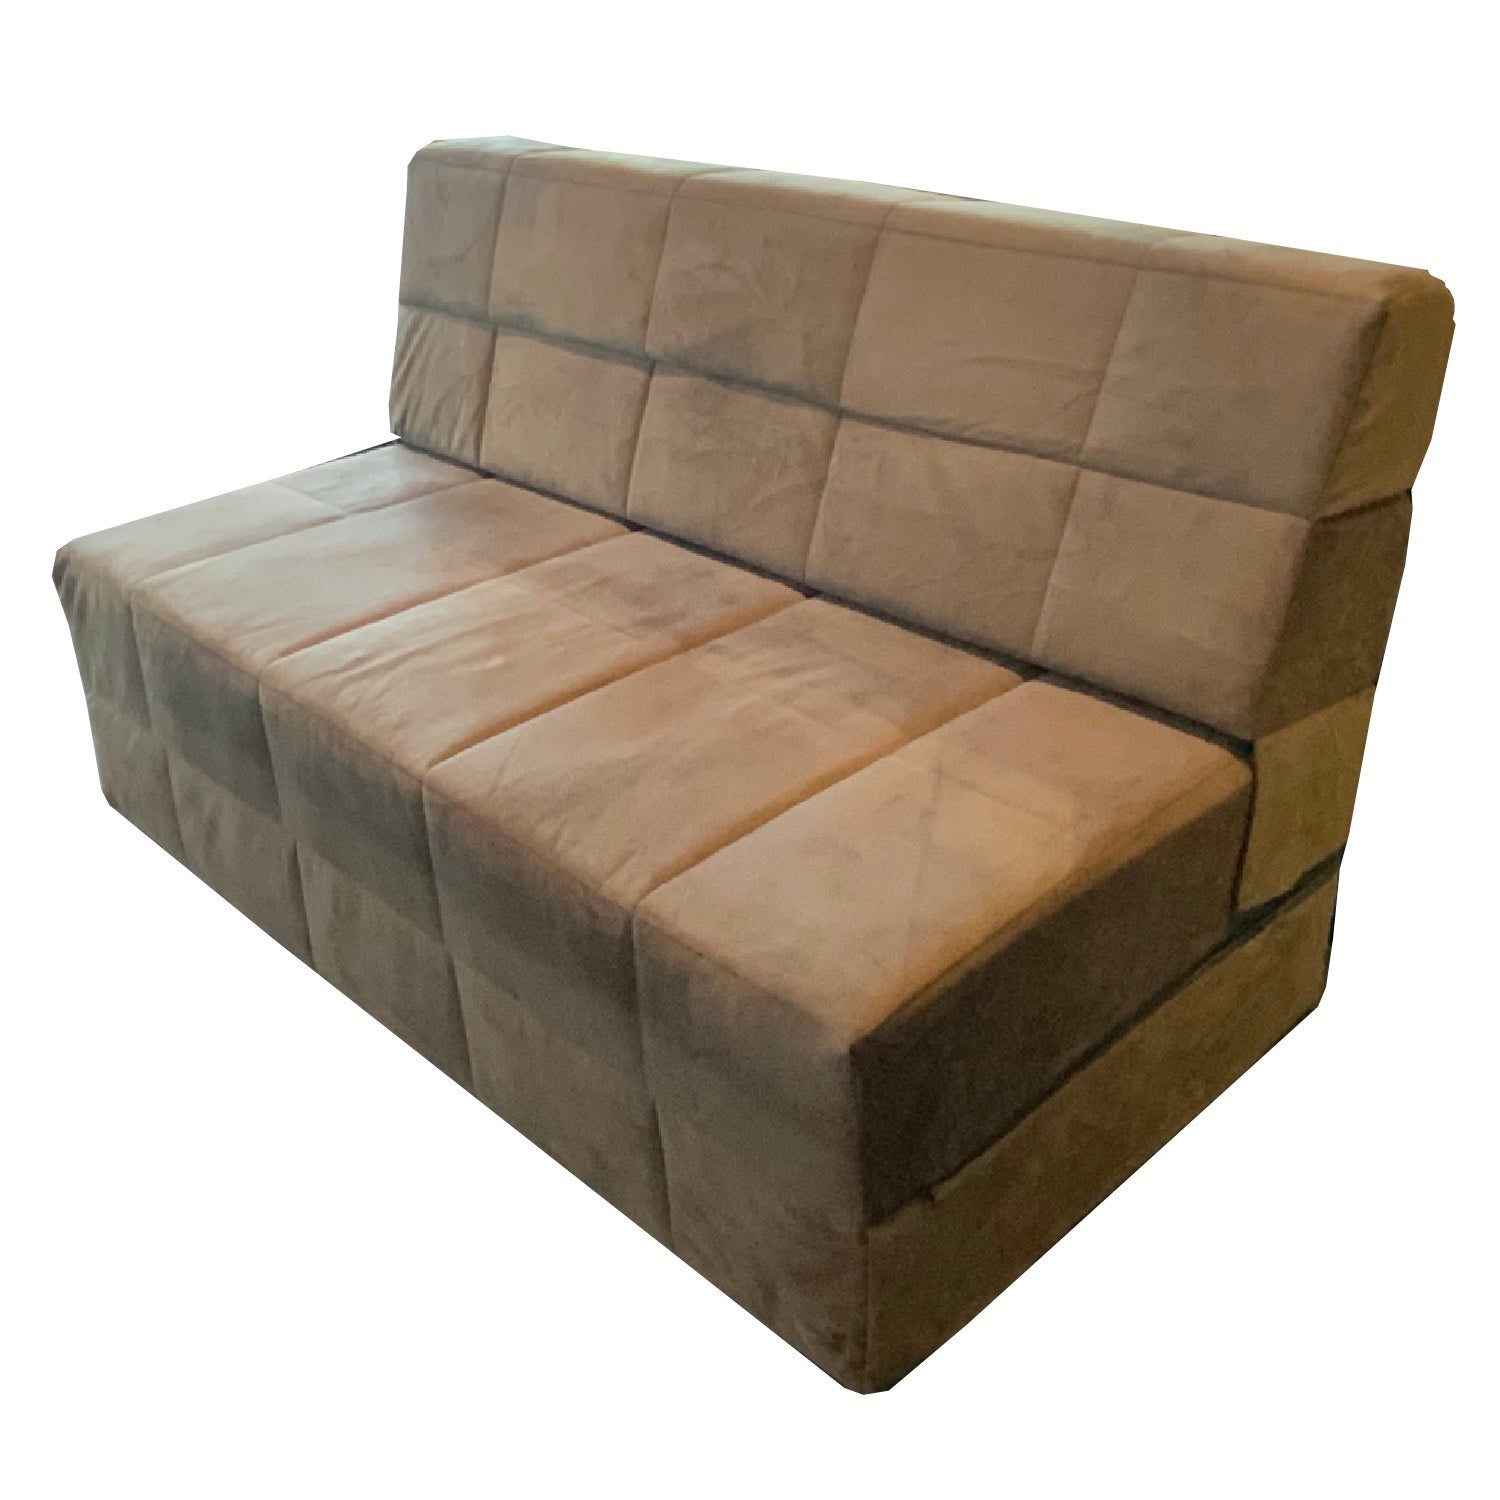 Uratex Jed Sofa Folding Bed